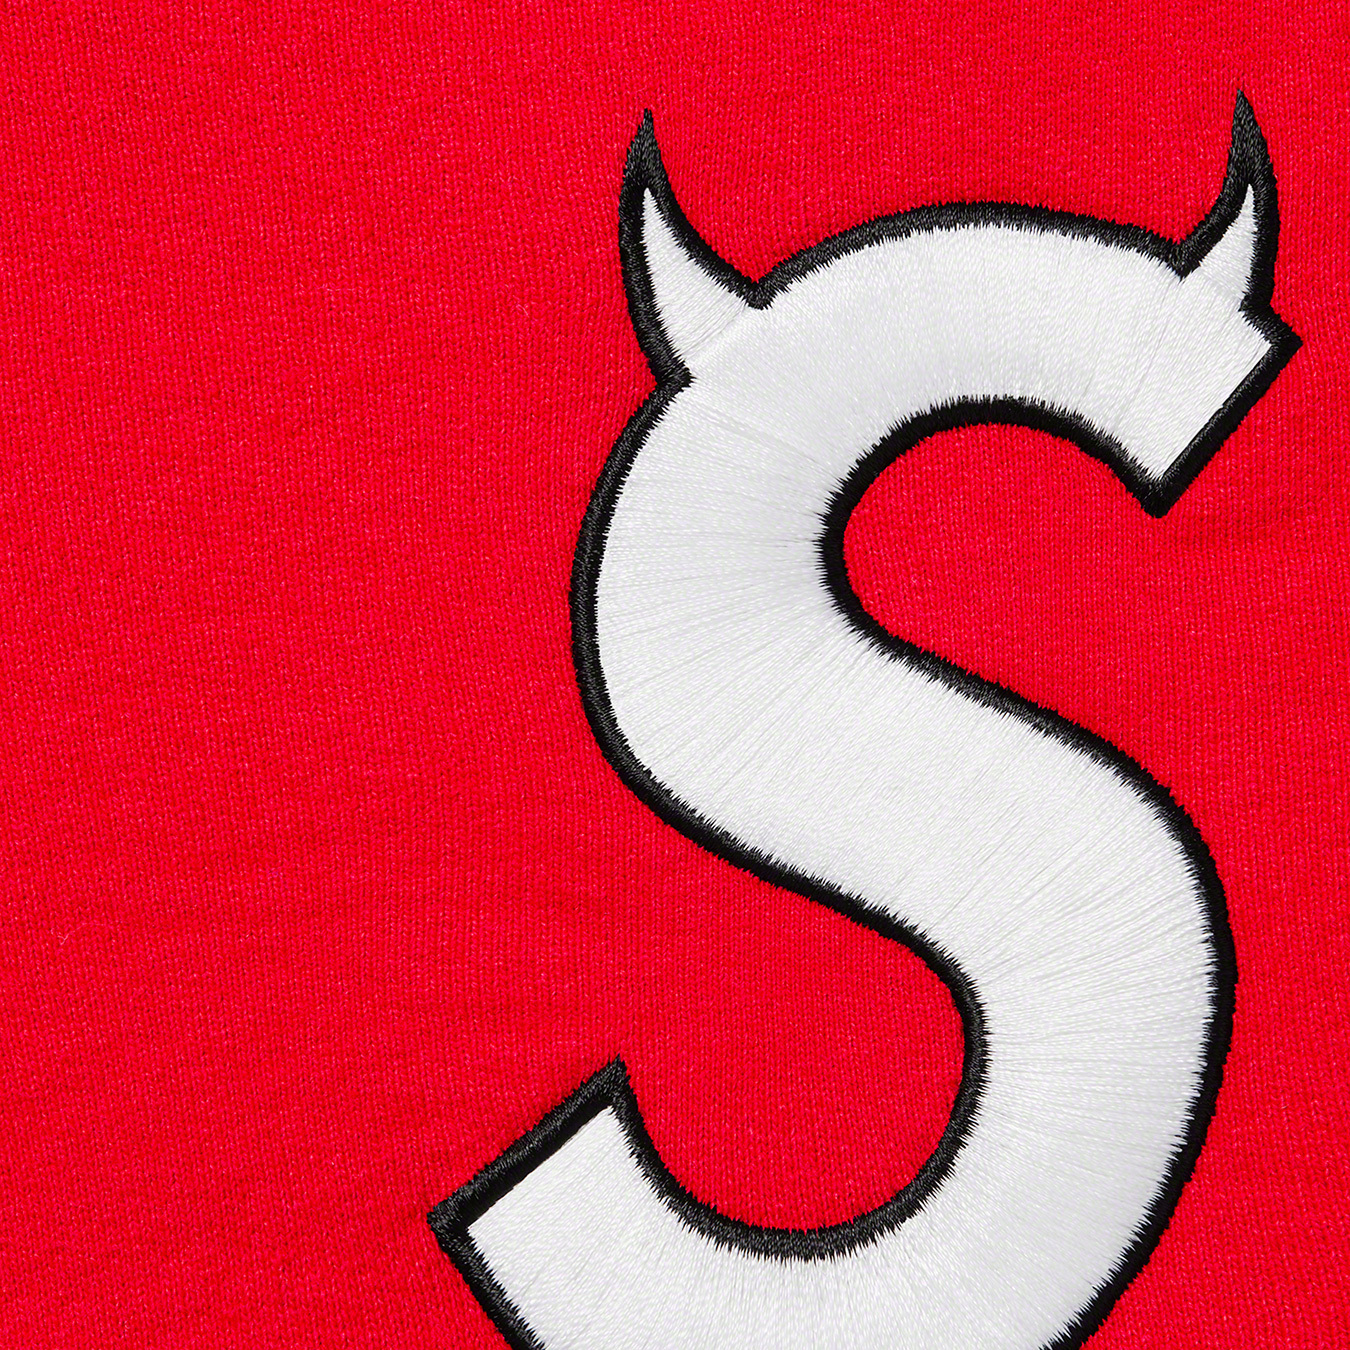 Supreme S Logo Hooded Sweatshirt (FW22) Brown